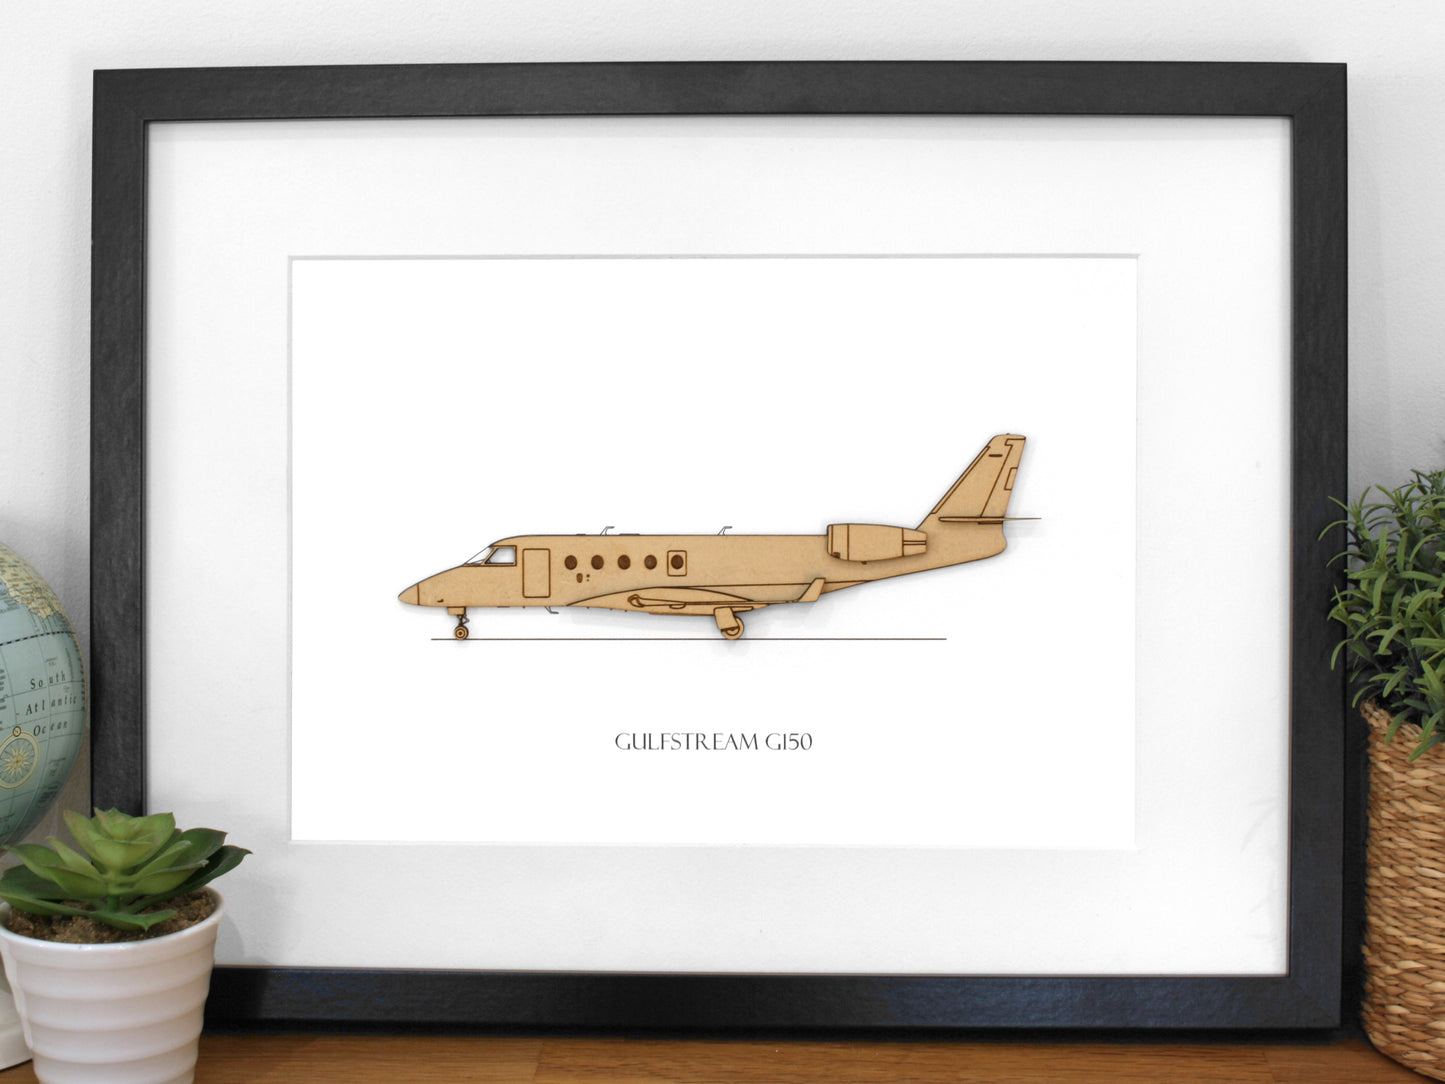 Gulfstream G150 aviation gifts